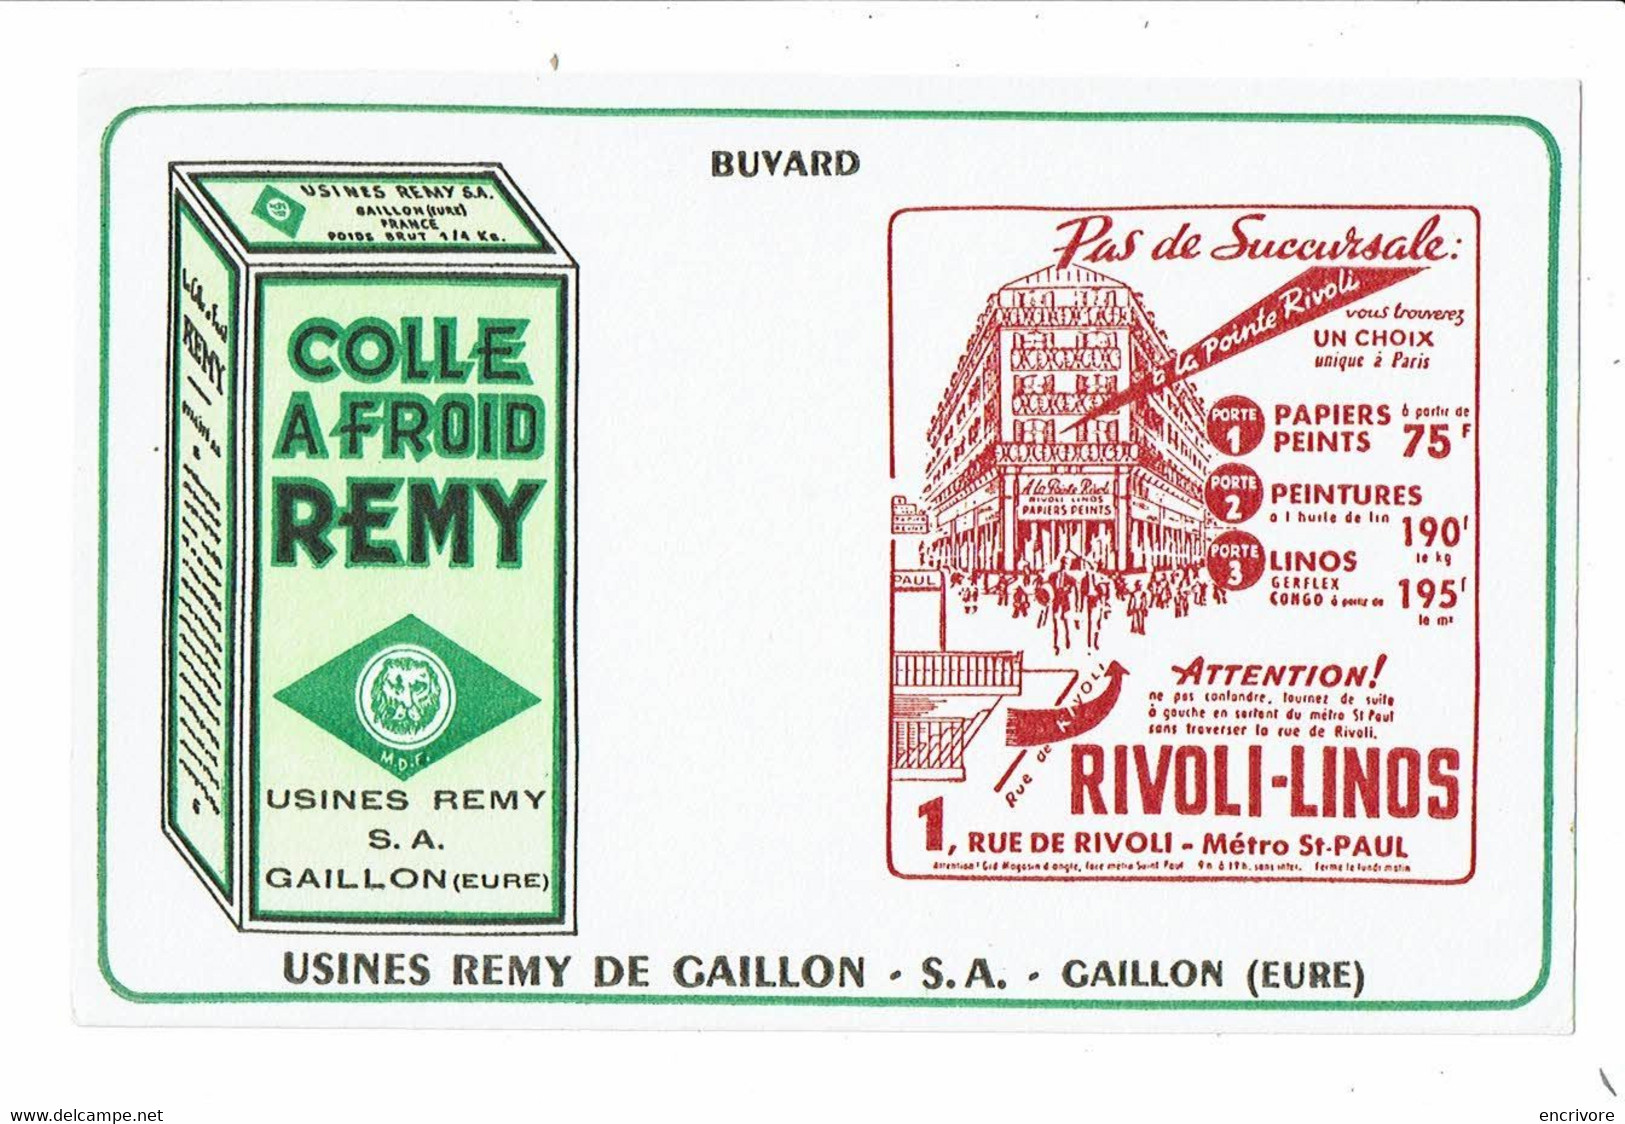 Buvard REMY DE GAILLON Colle à Froid à La Pointe Rivoli Rivoli-Linos - Peintures